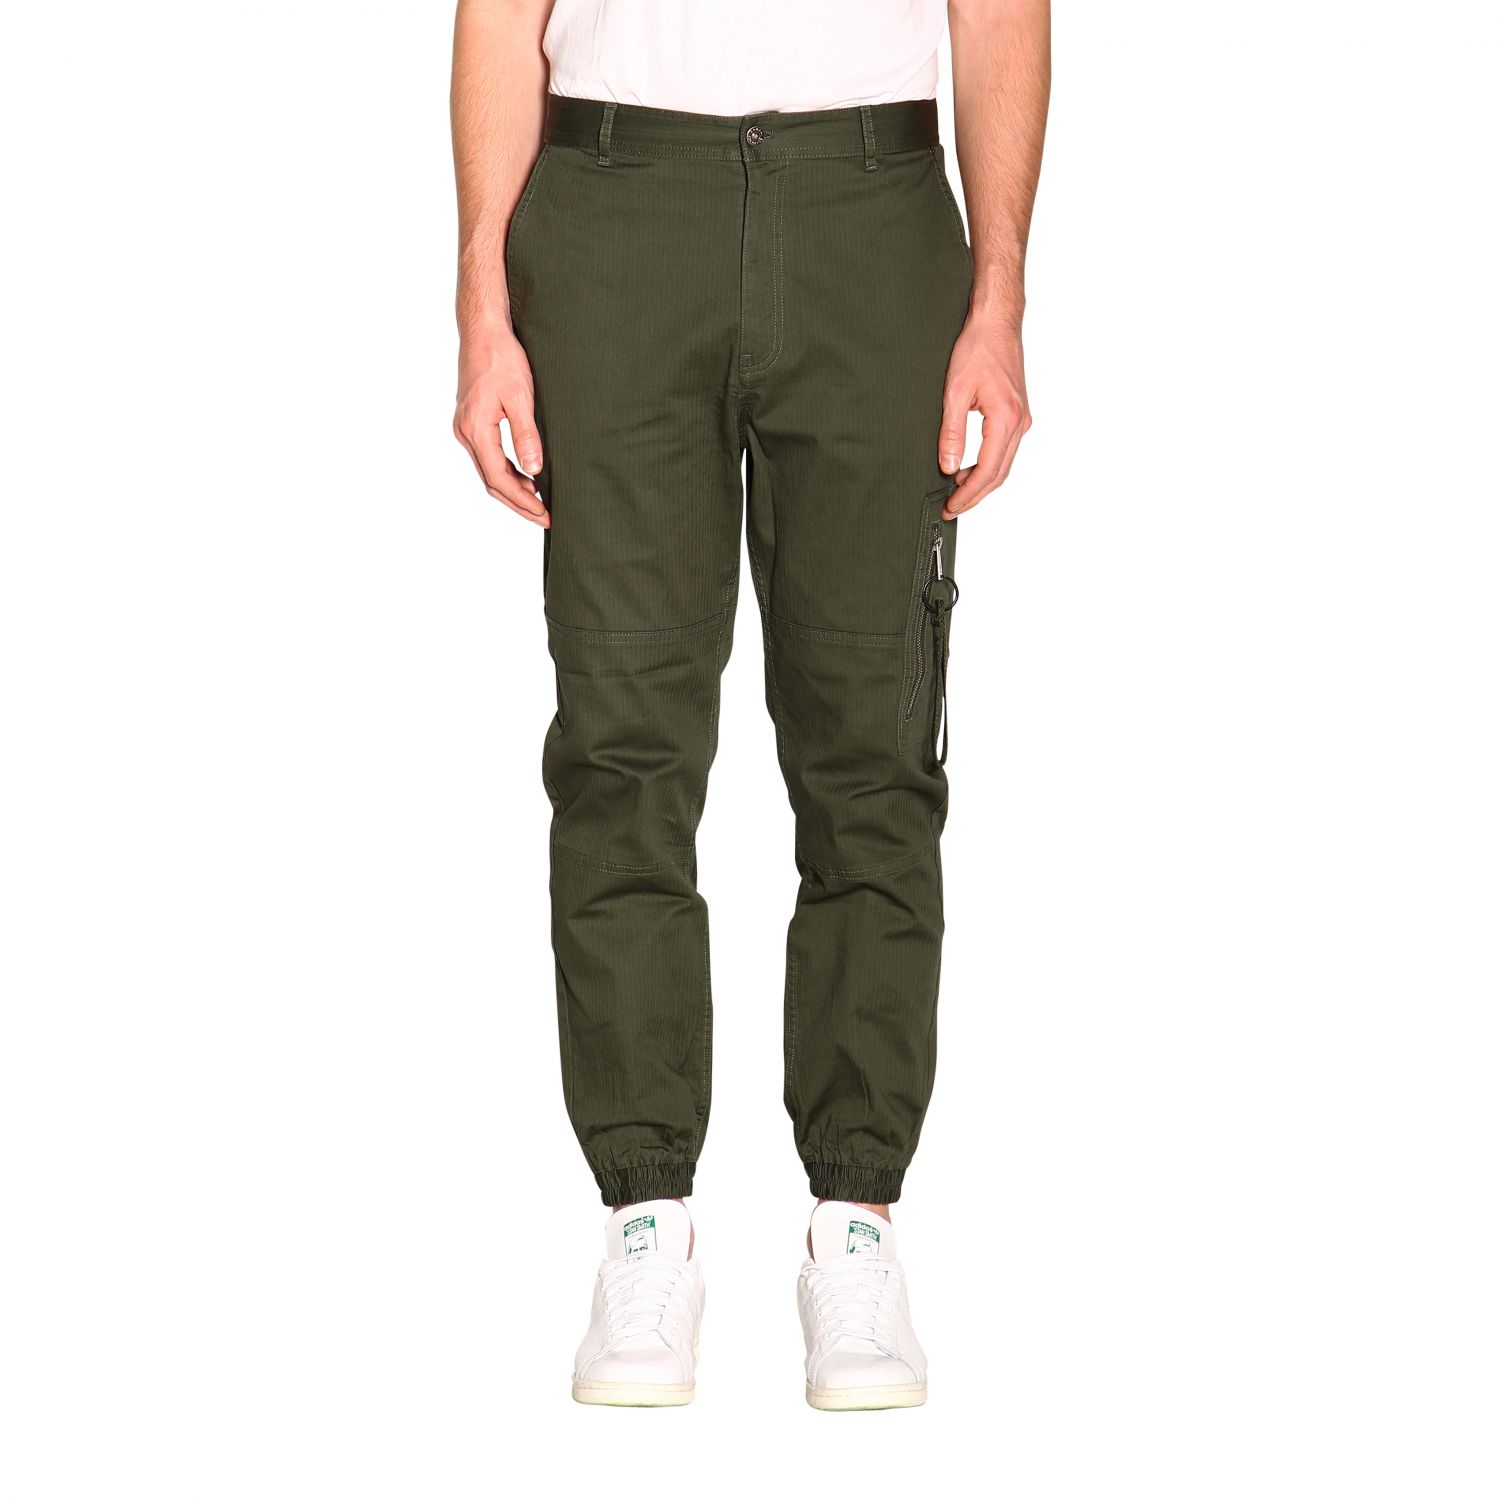 Armani Exchange Outlet: Pants men - Military | Pants Armani Exchange ...